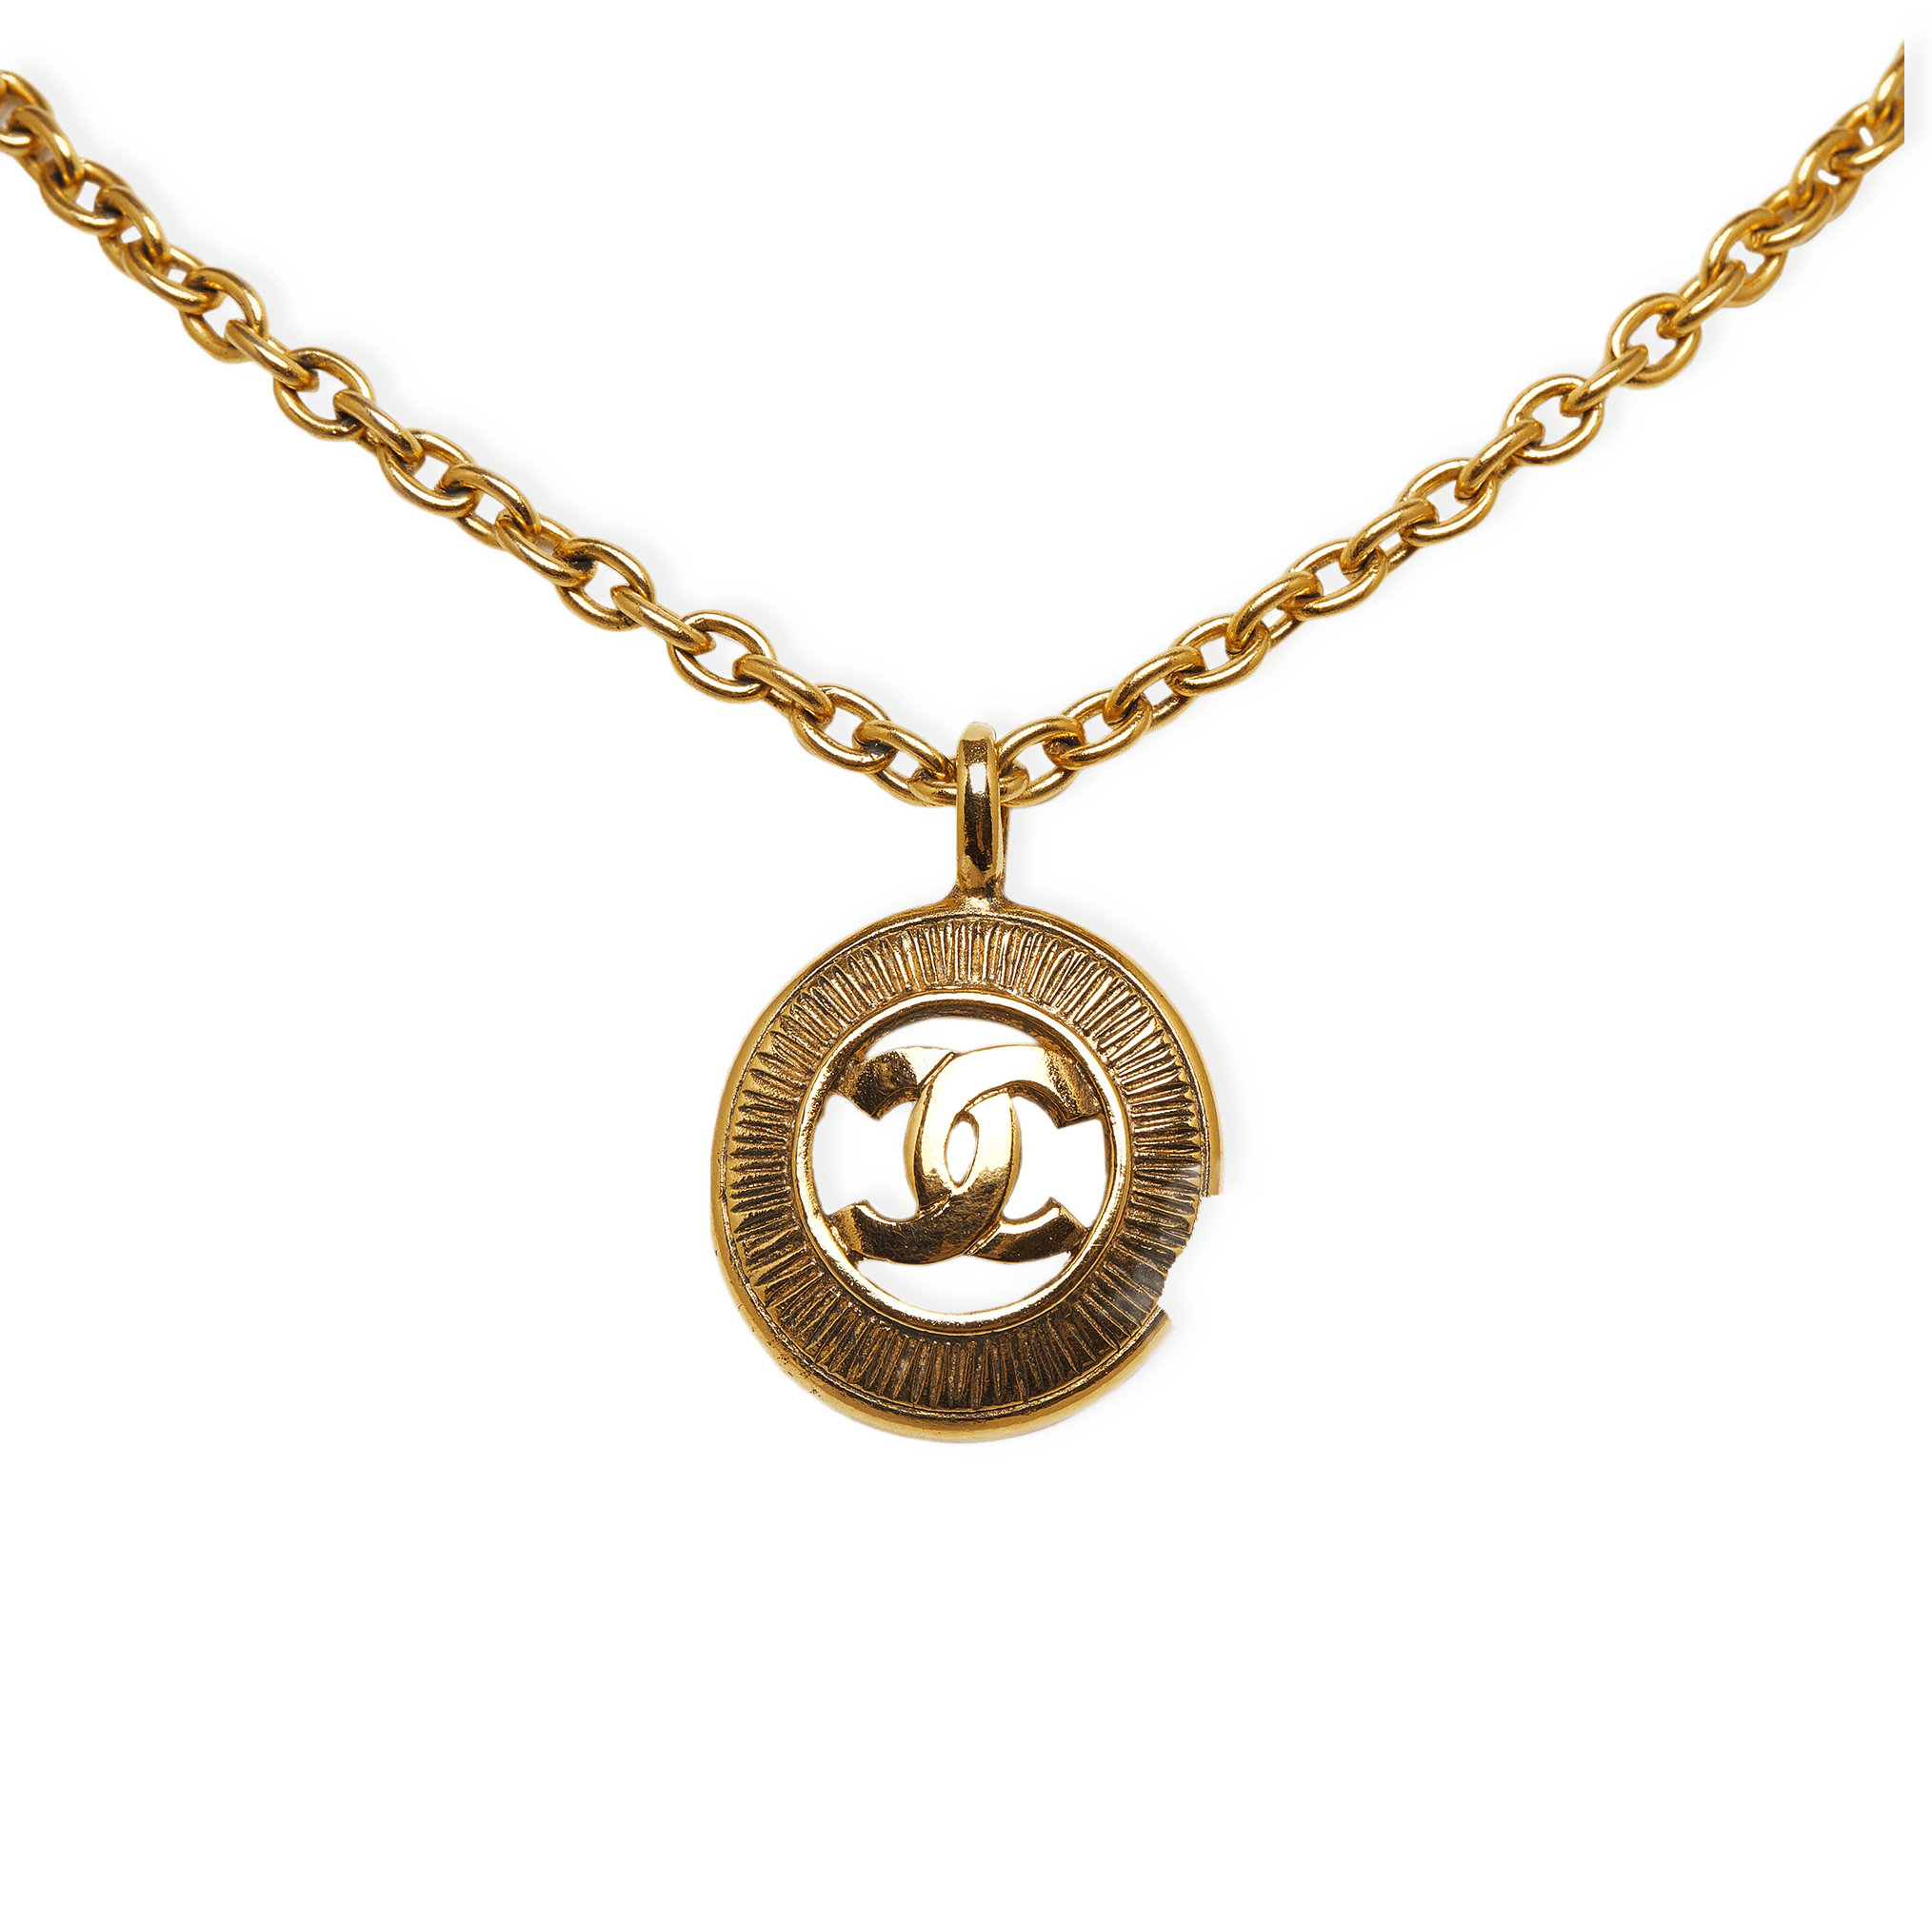 Chanel Cc Round Pendant Necklace från Luxclusif